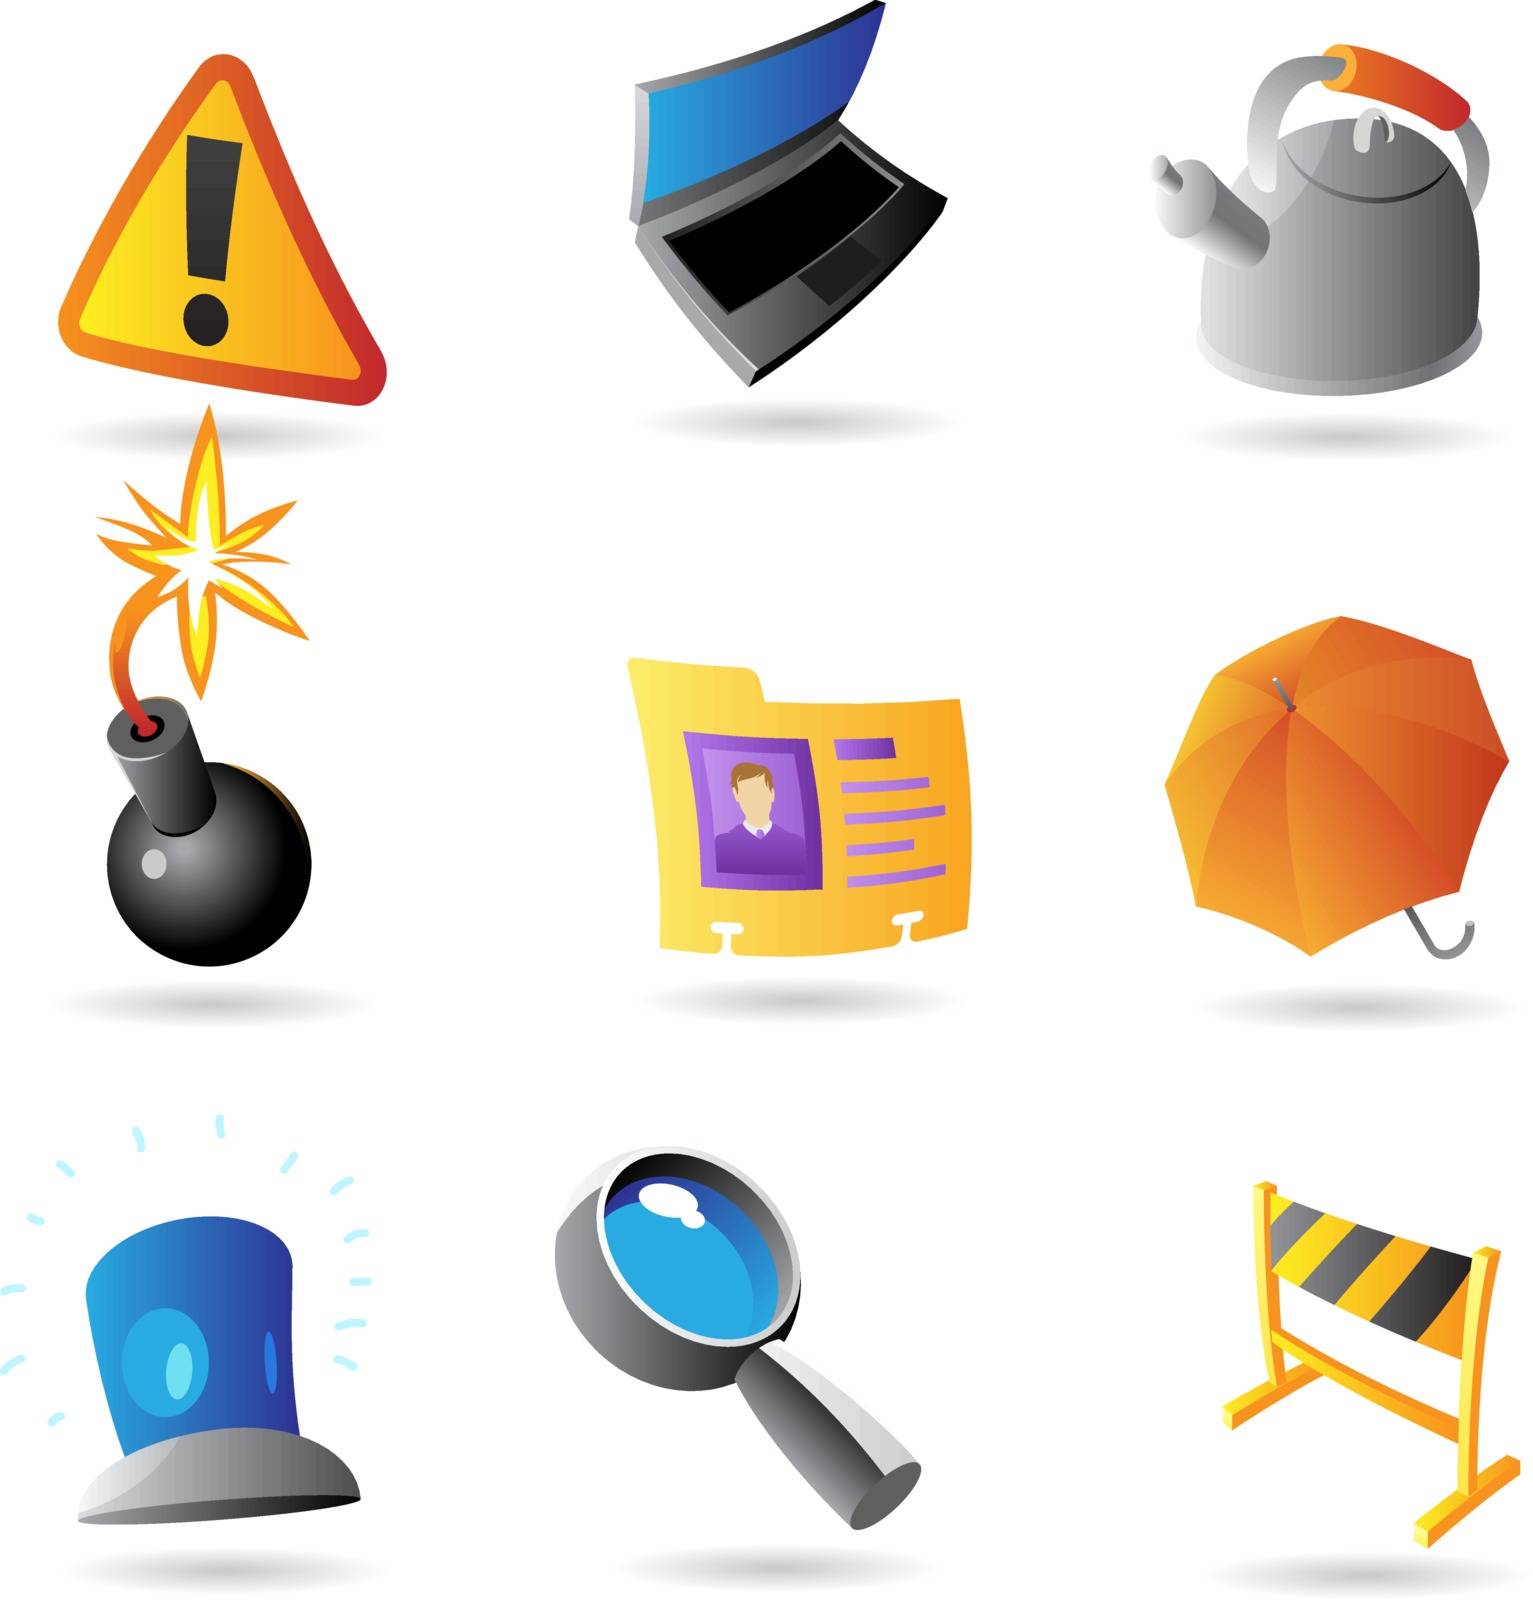 Icons for program interface by ildogesto